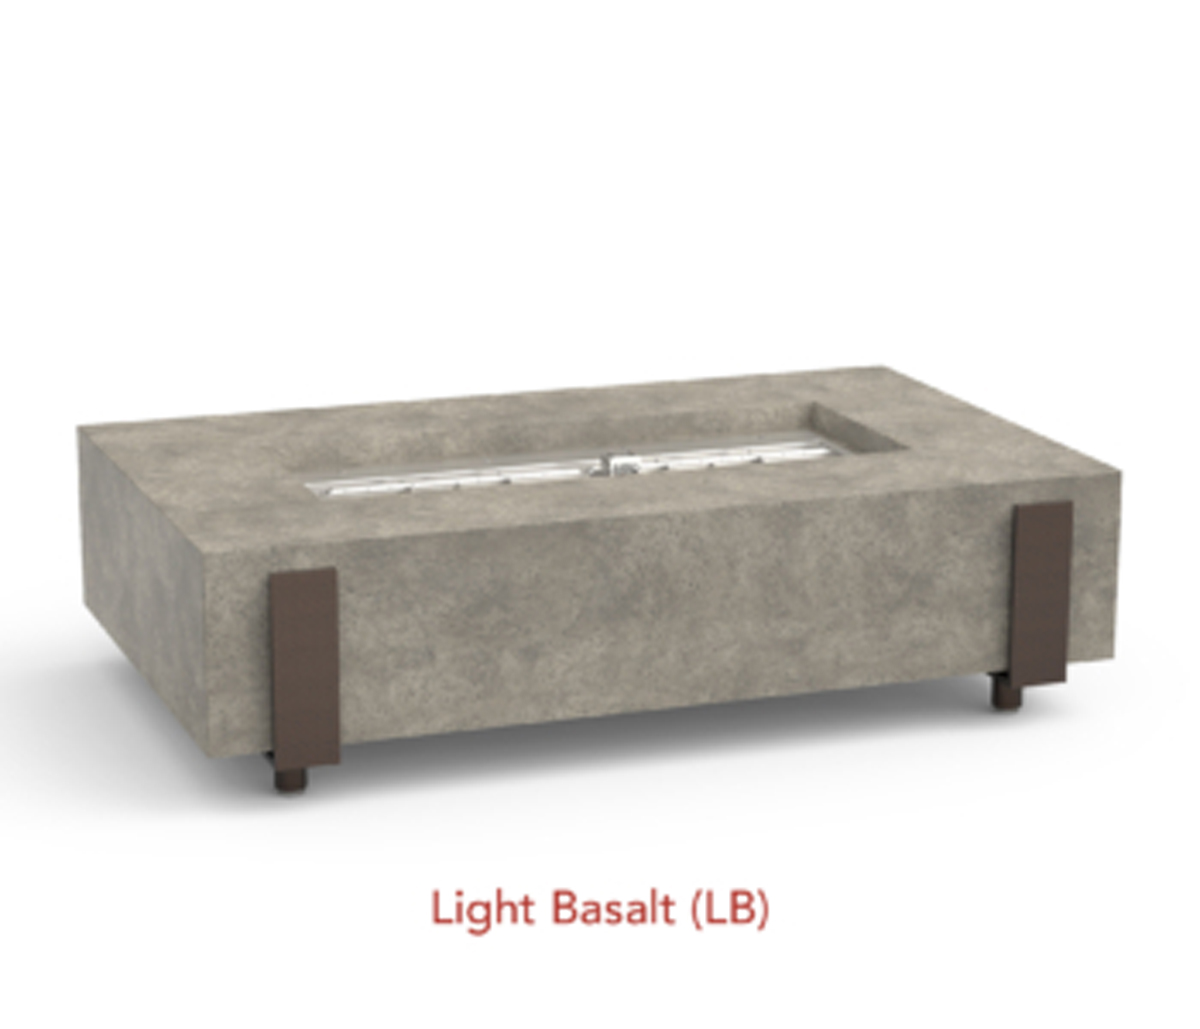 iron saddle firetable – light basalt – ng product image